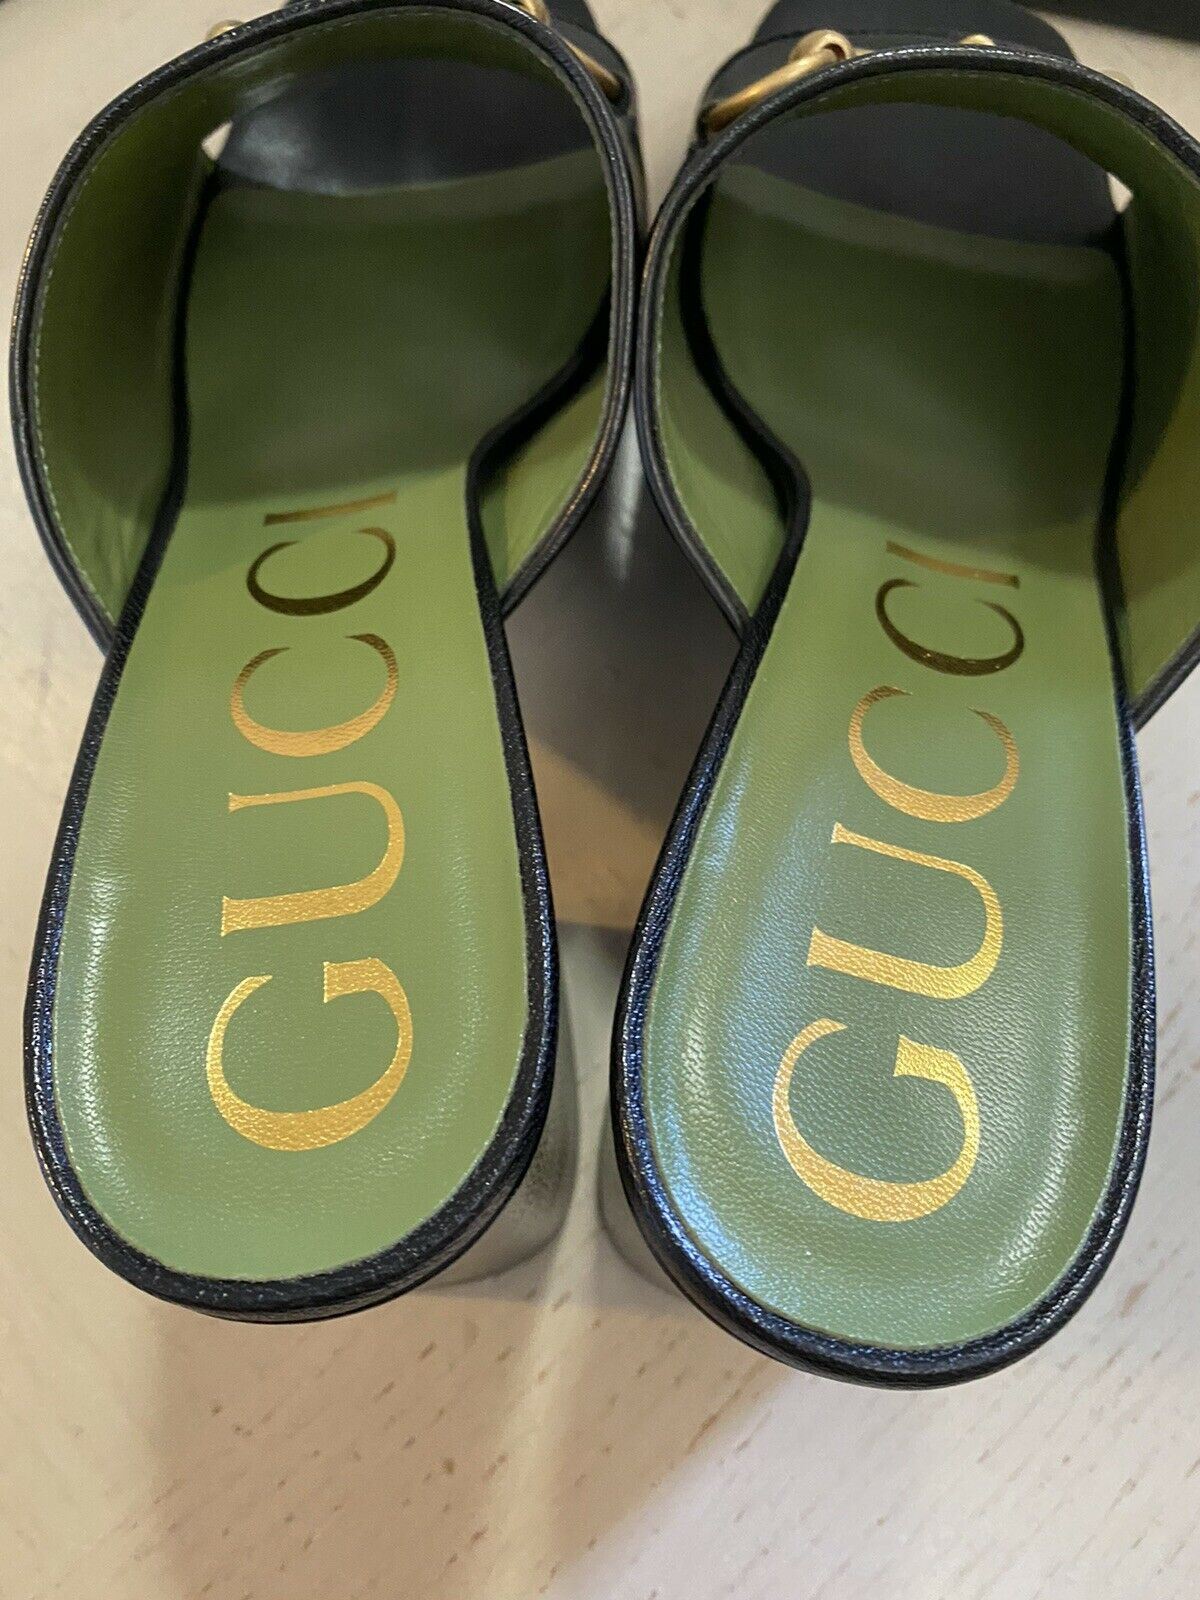 NIB Gucci Women’s Leather GG Monogram Sandal Shoes Black 8 US ( 38 Eu ) Italy